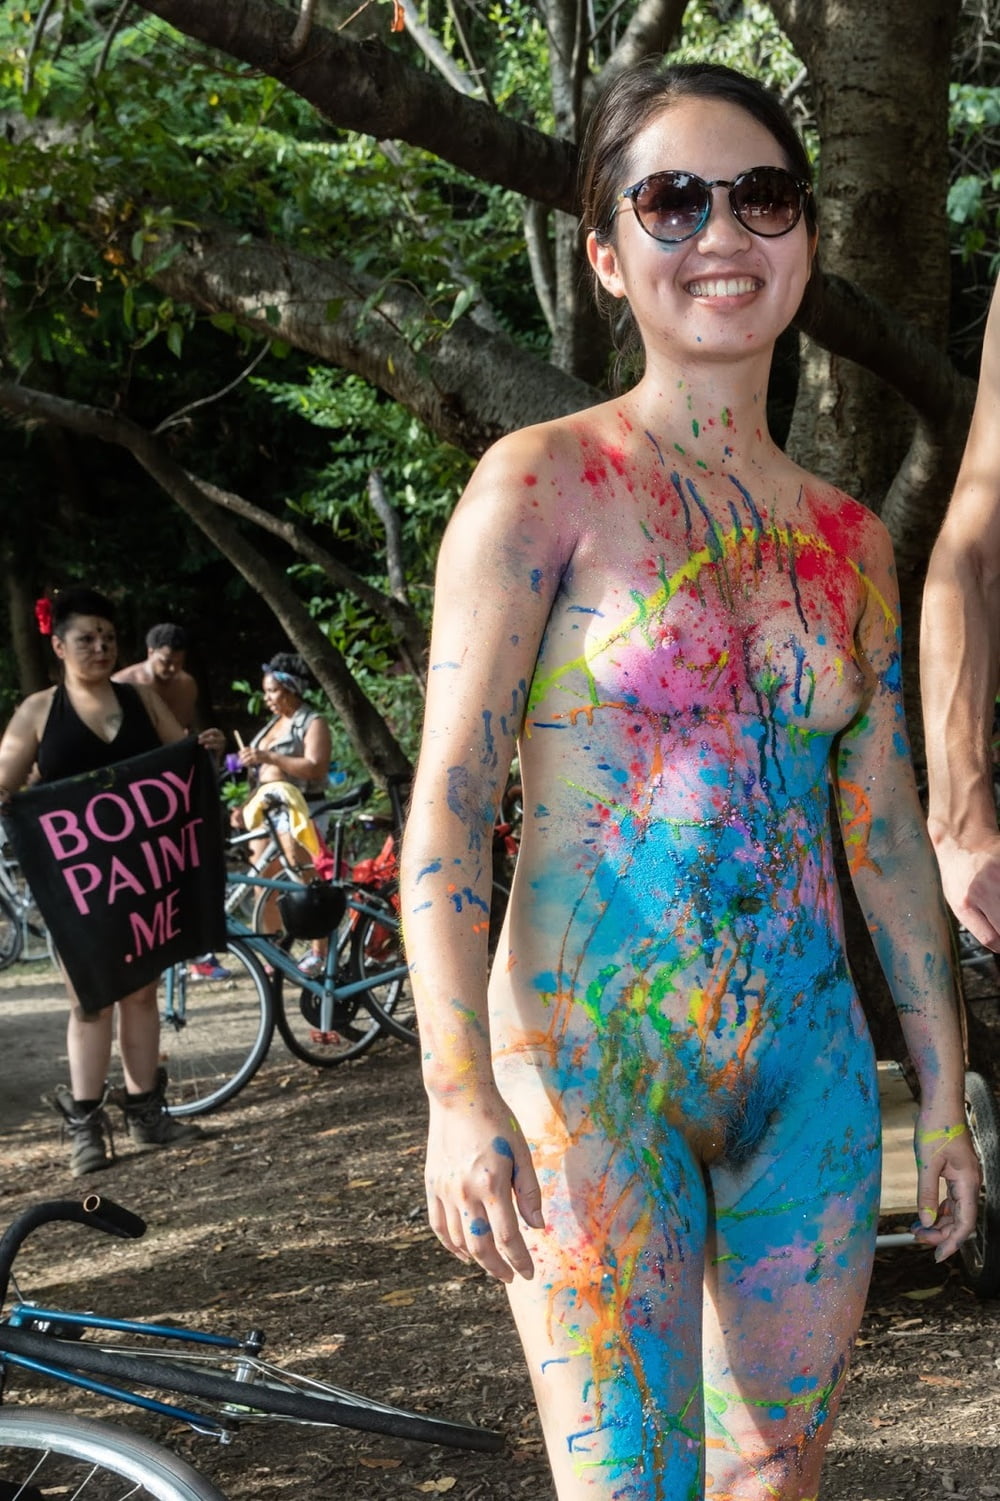 Naked body paint public